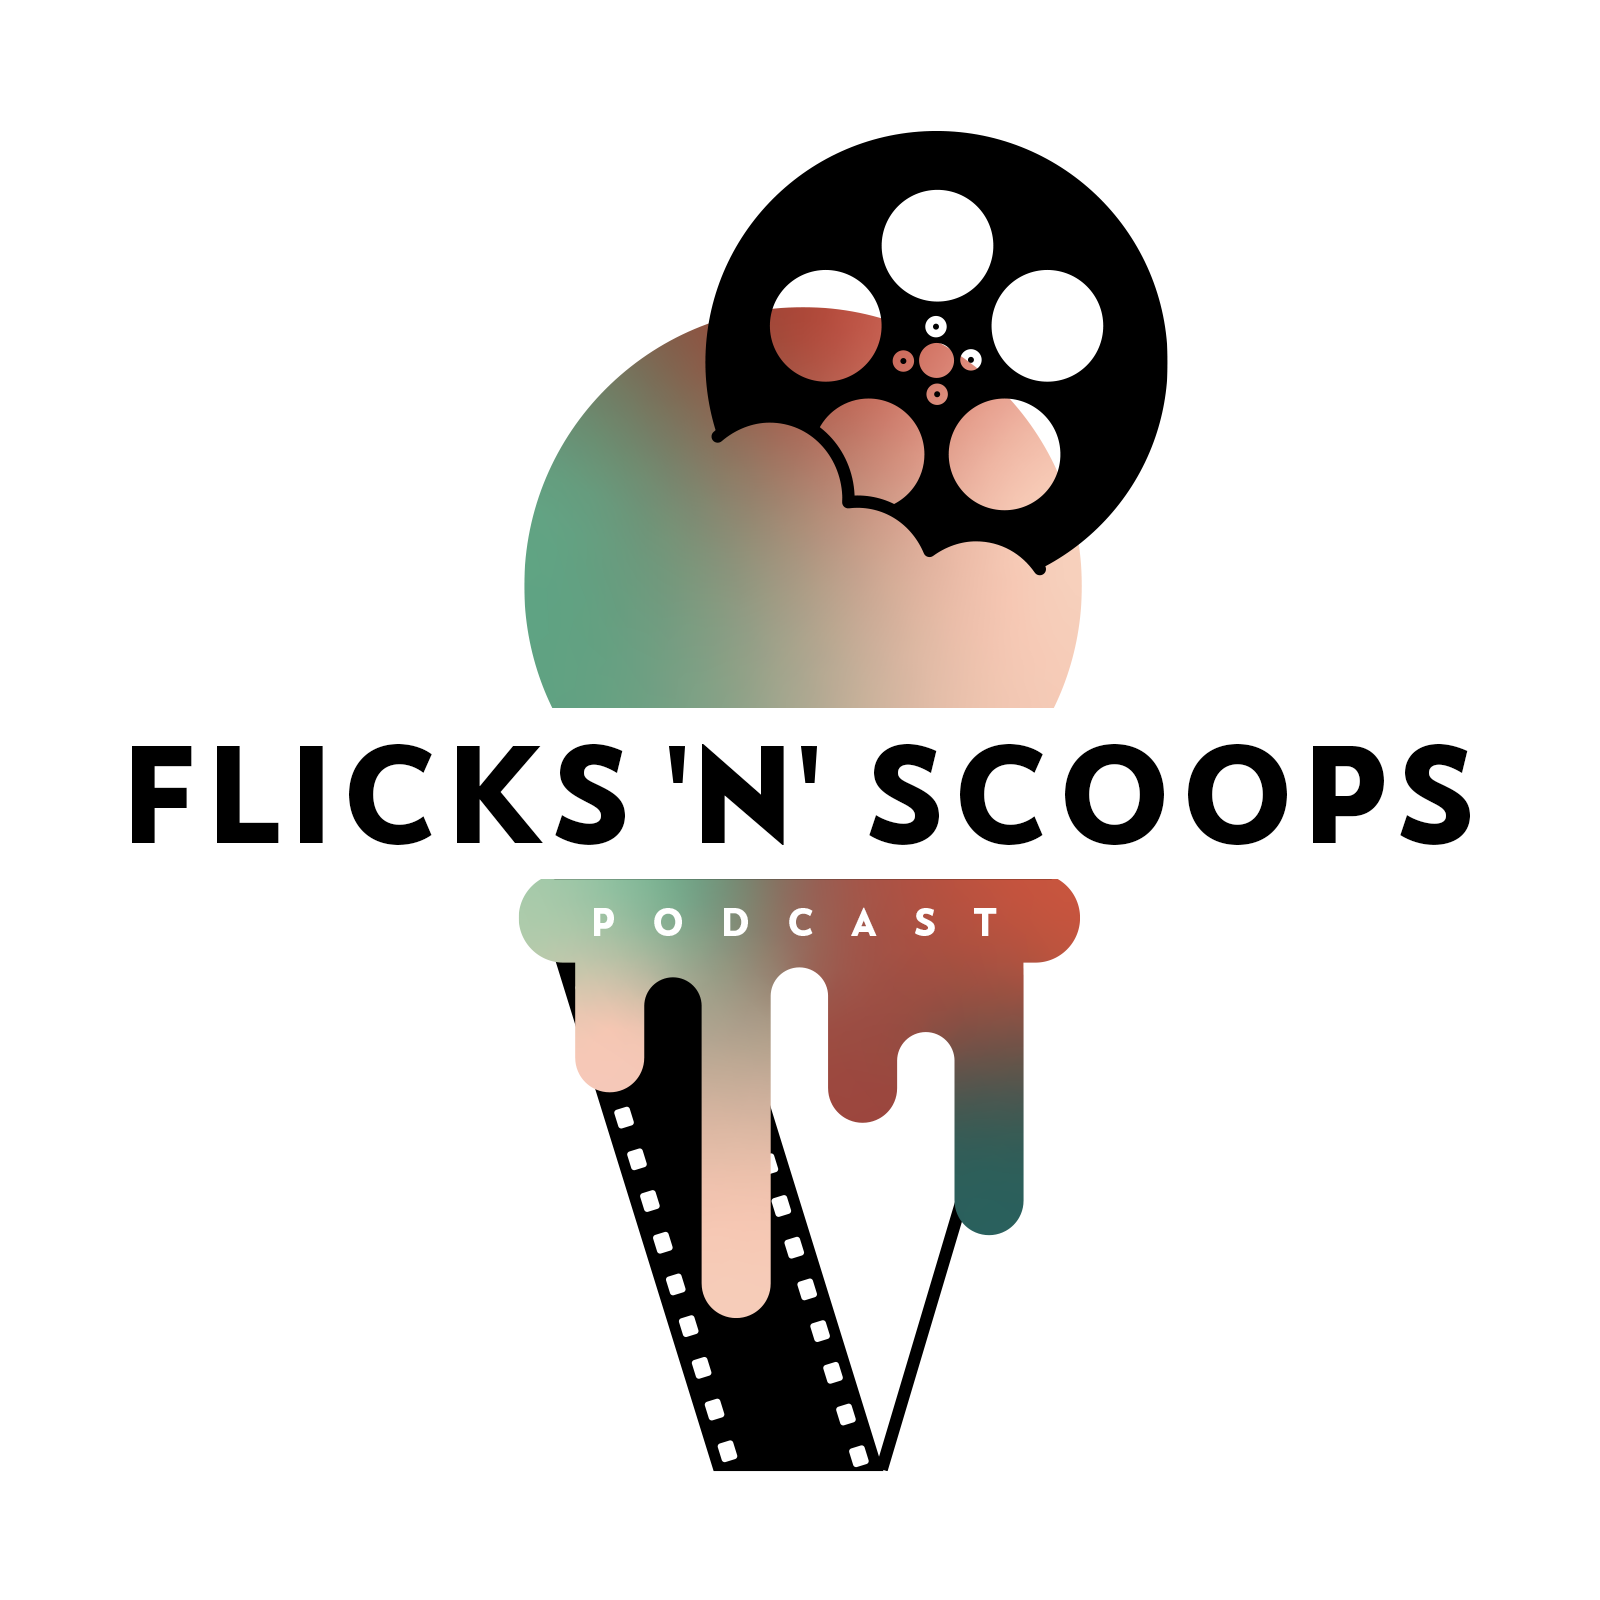 Flicks 'n' Scoops Podcast